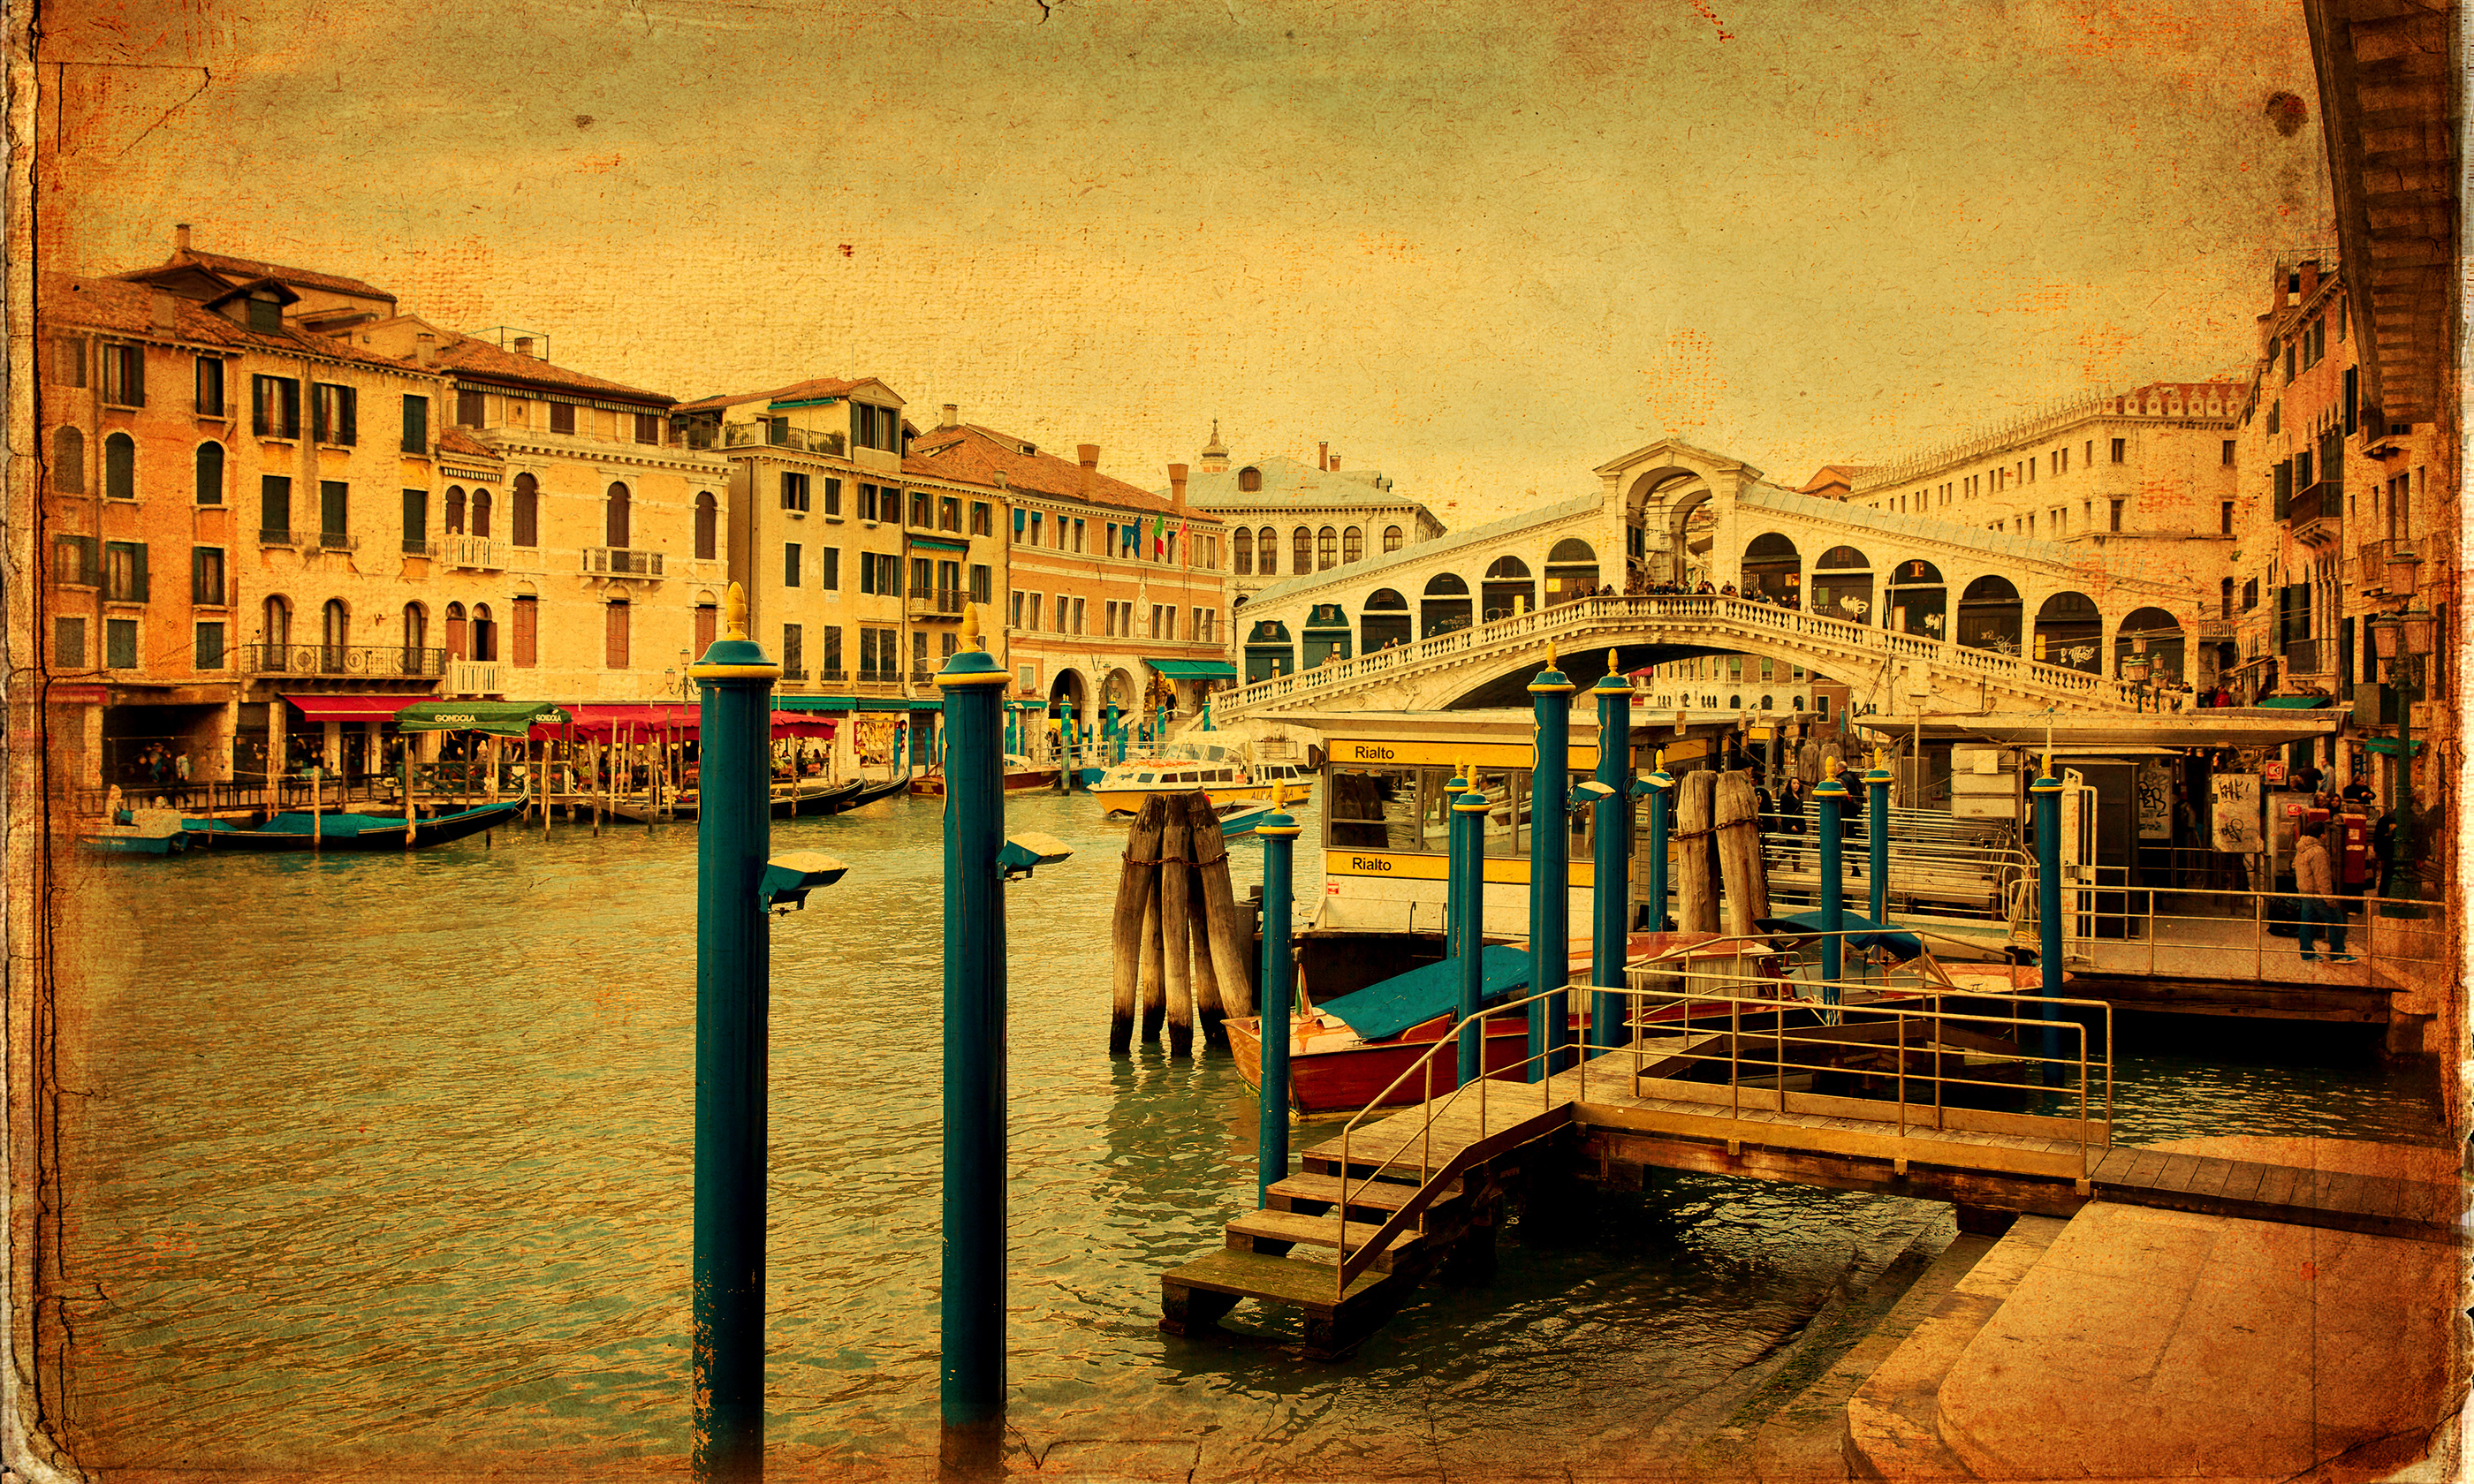 Venice (Image form Shutterstock)